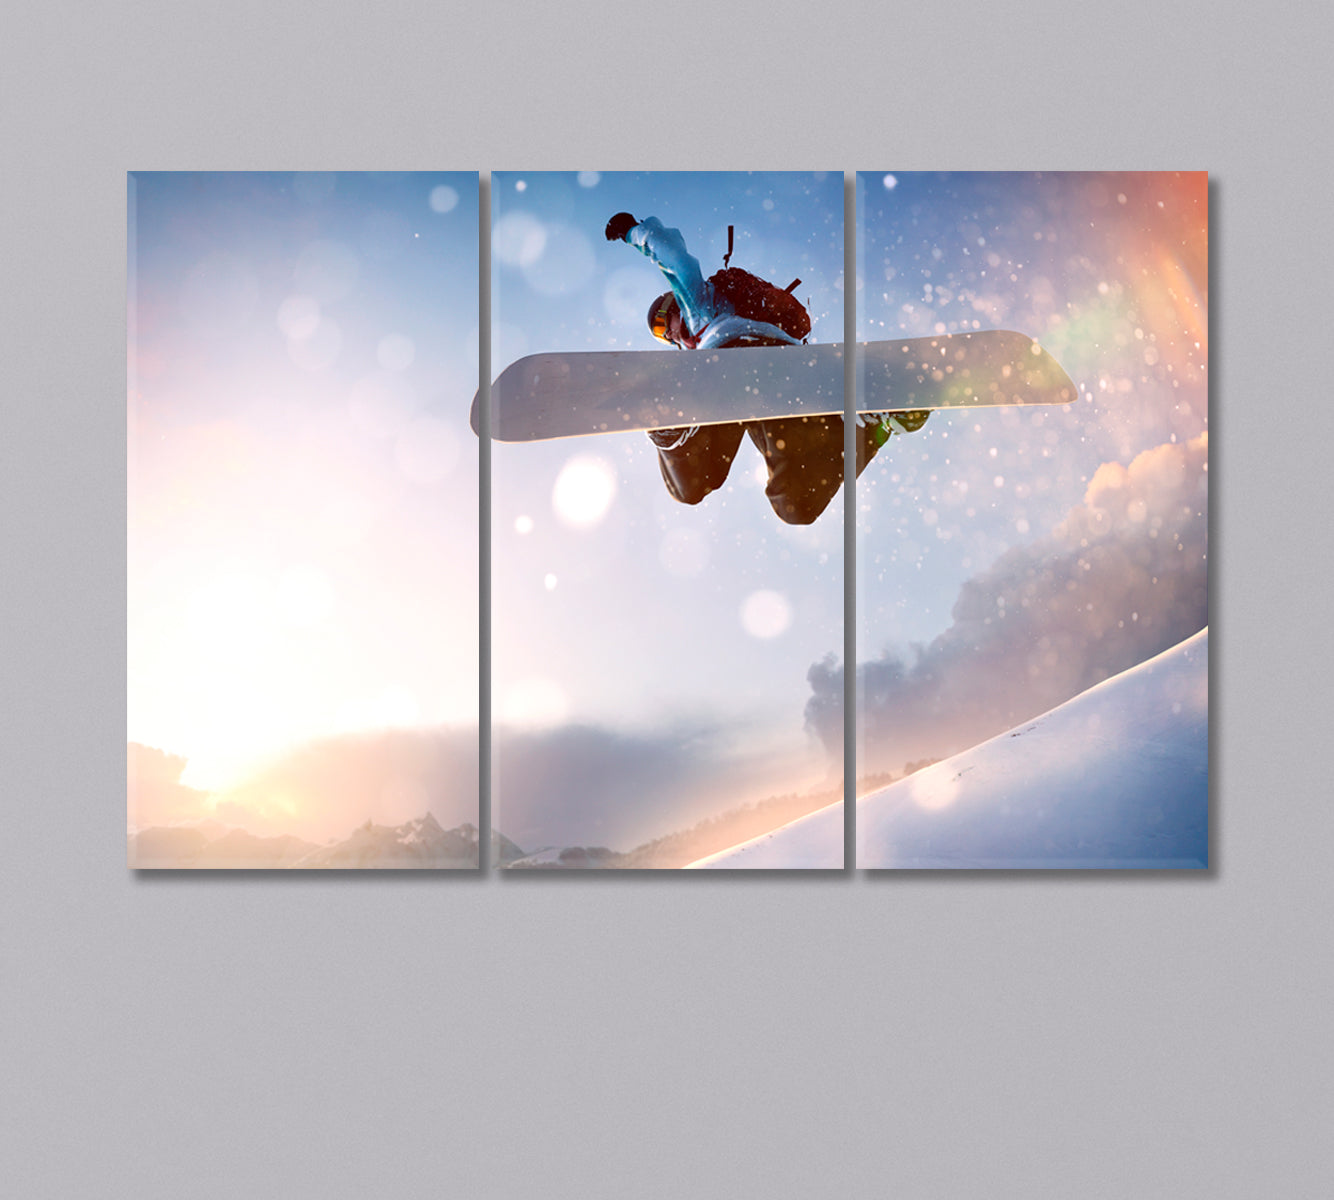 Snowboarder in Flight Canvas Print-Canvas Print-CetArt-3 Panels-36x24 inches-CetArt